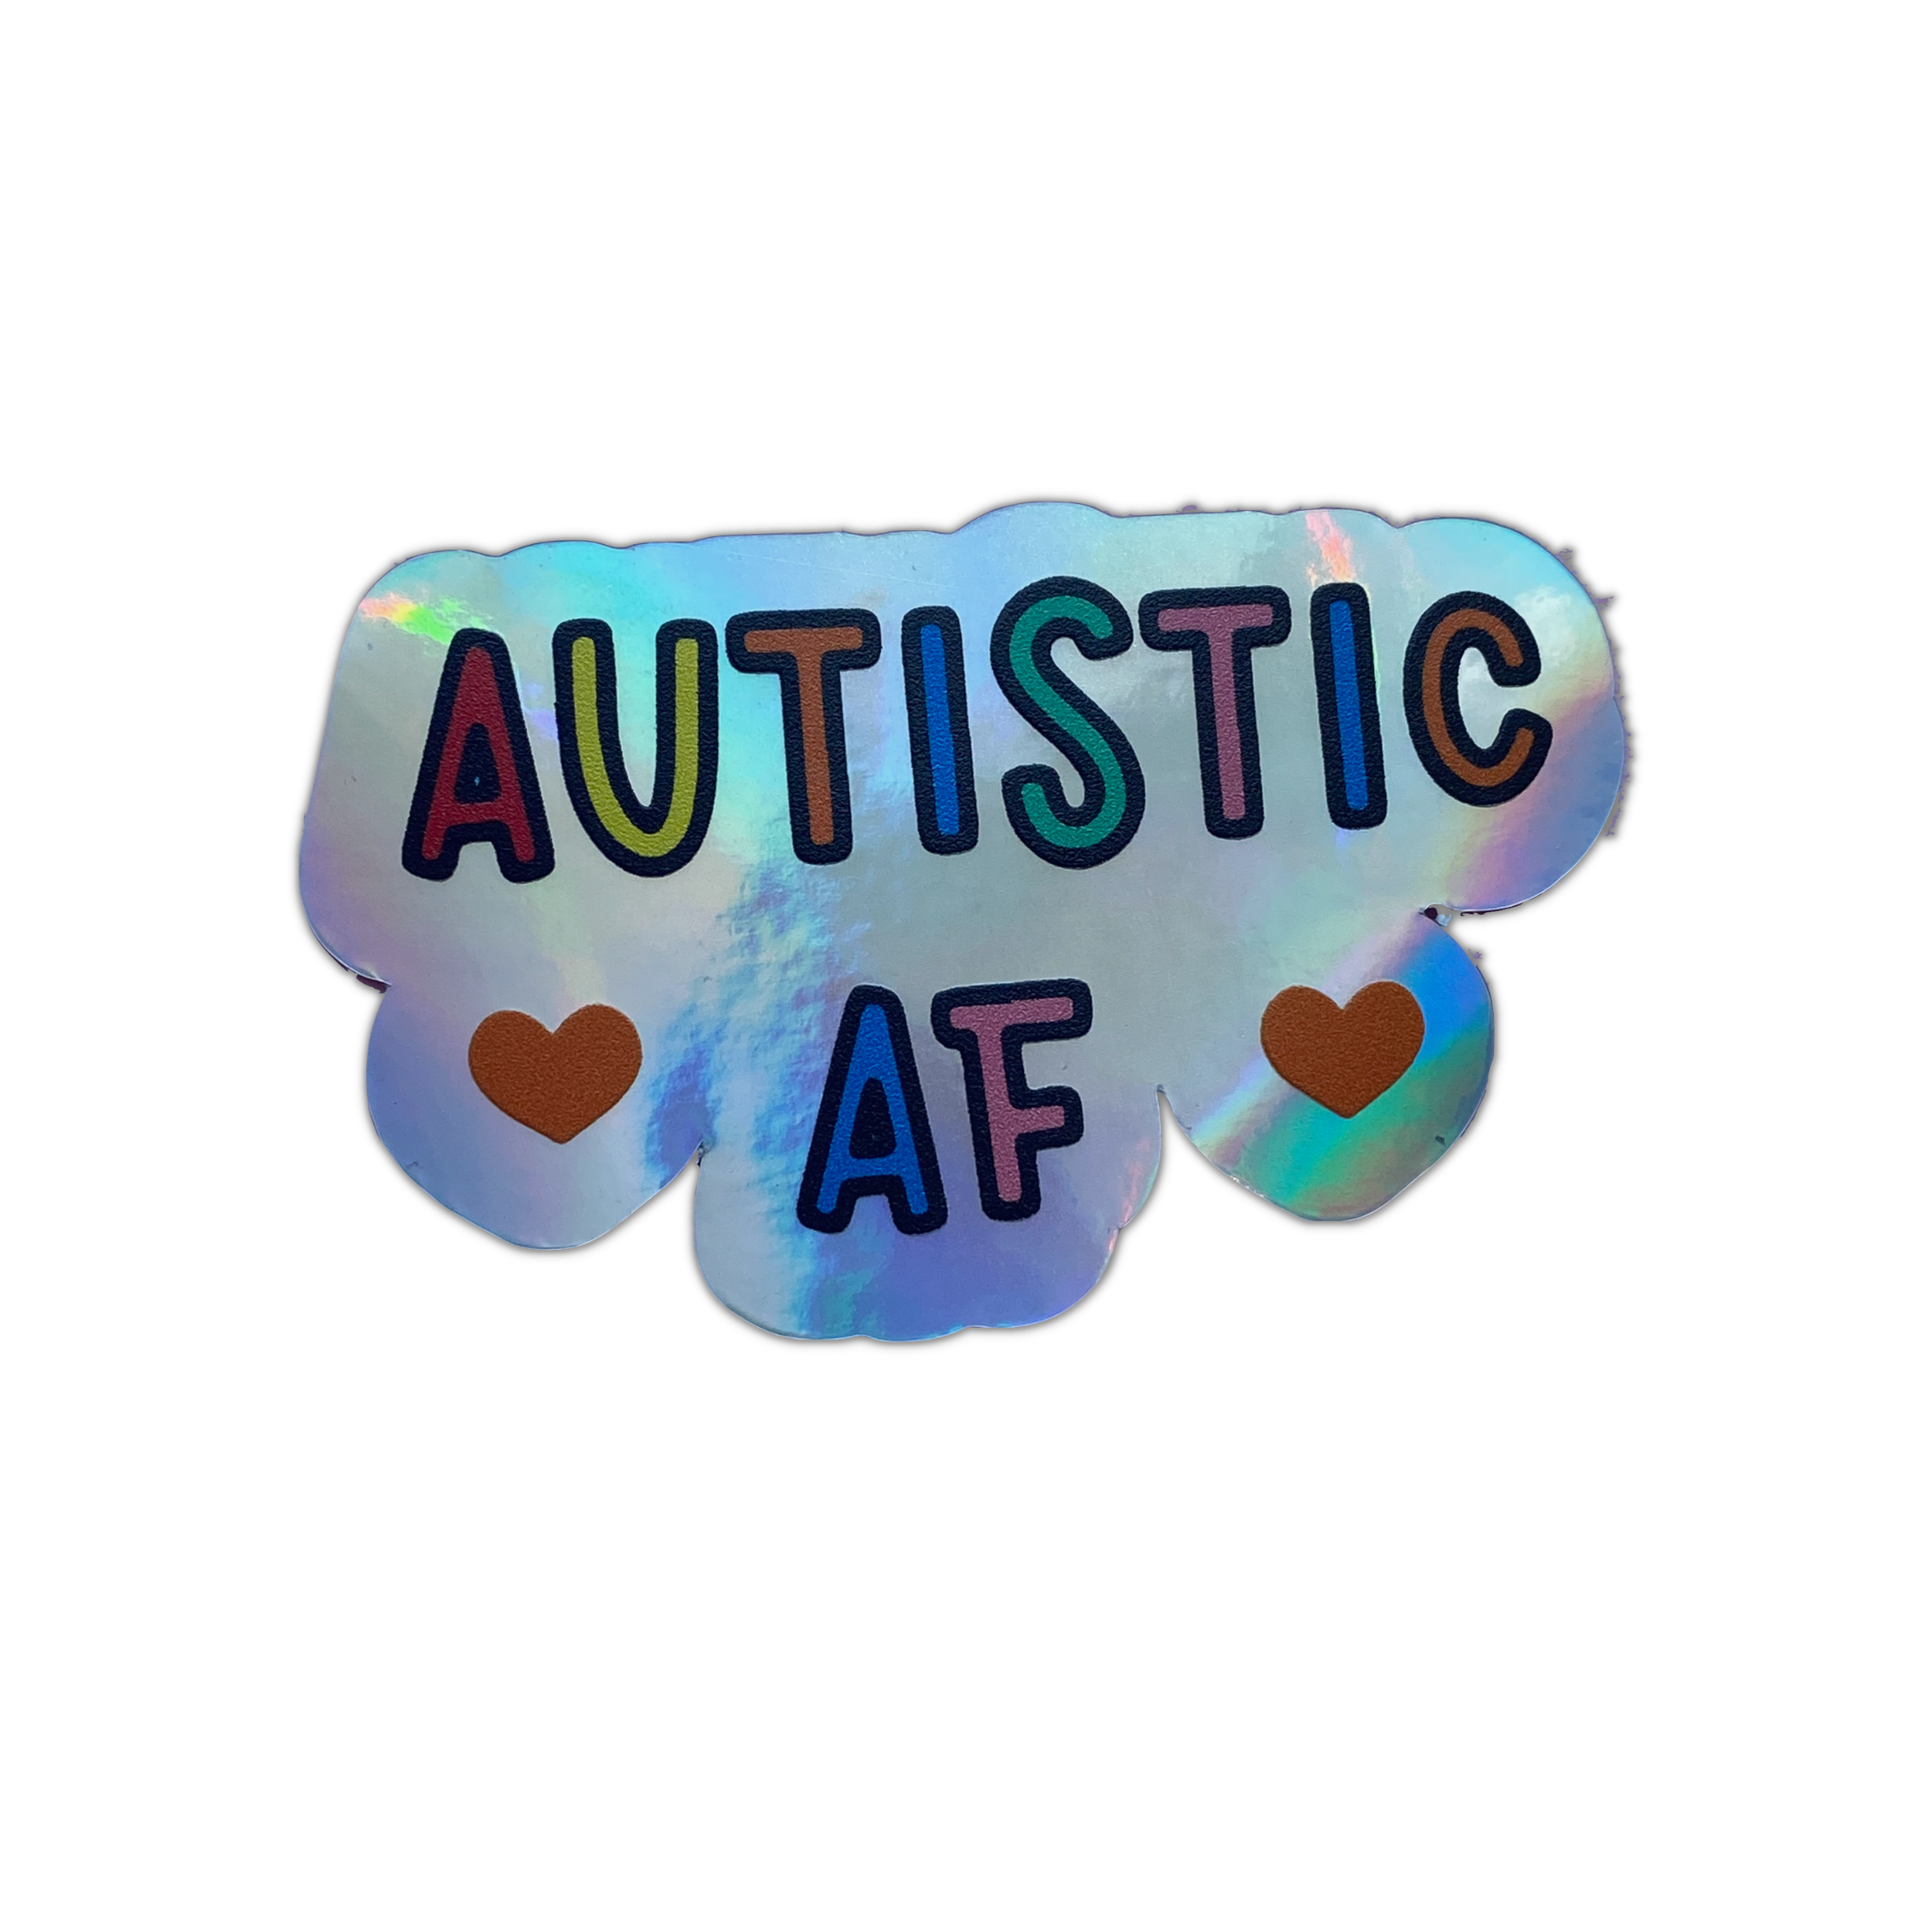 Autistic af holographic iridescent sticker